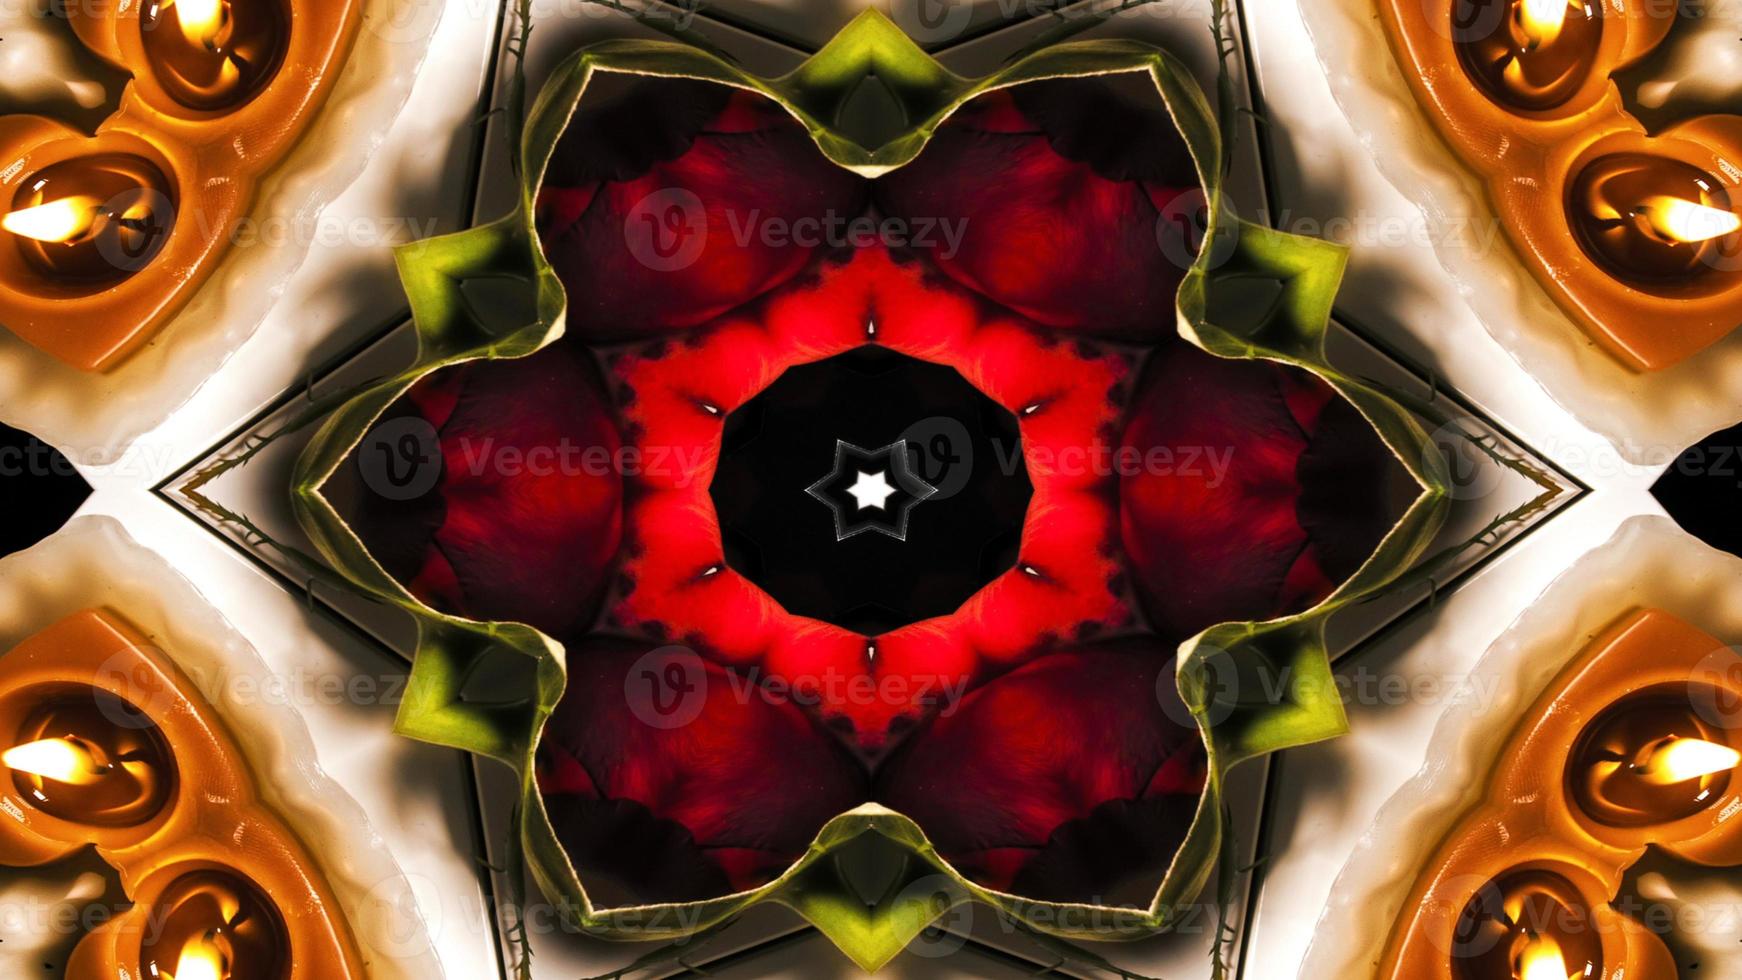 färgglada hypnotiska symmetriska kalejdoskop foto